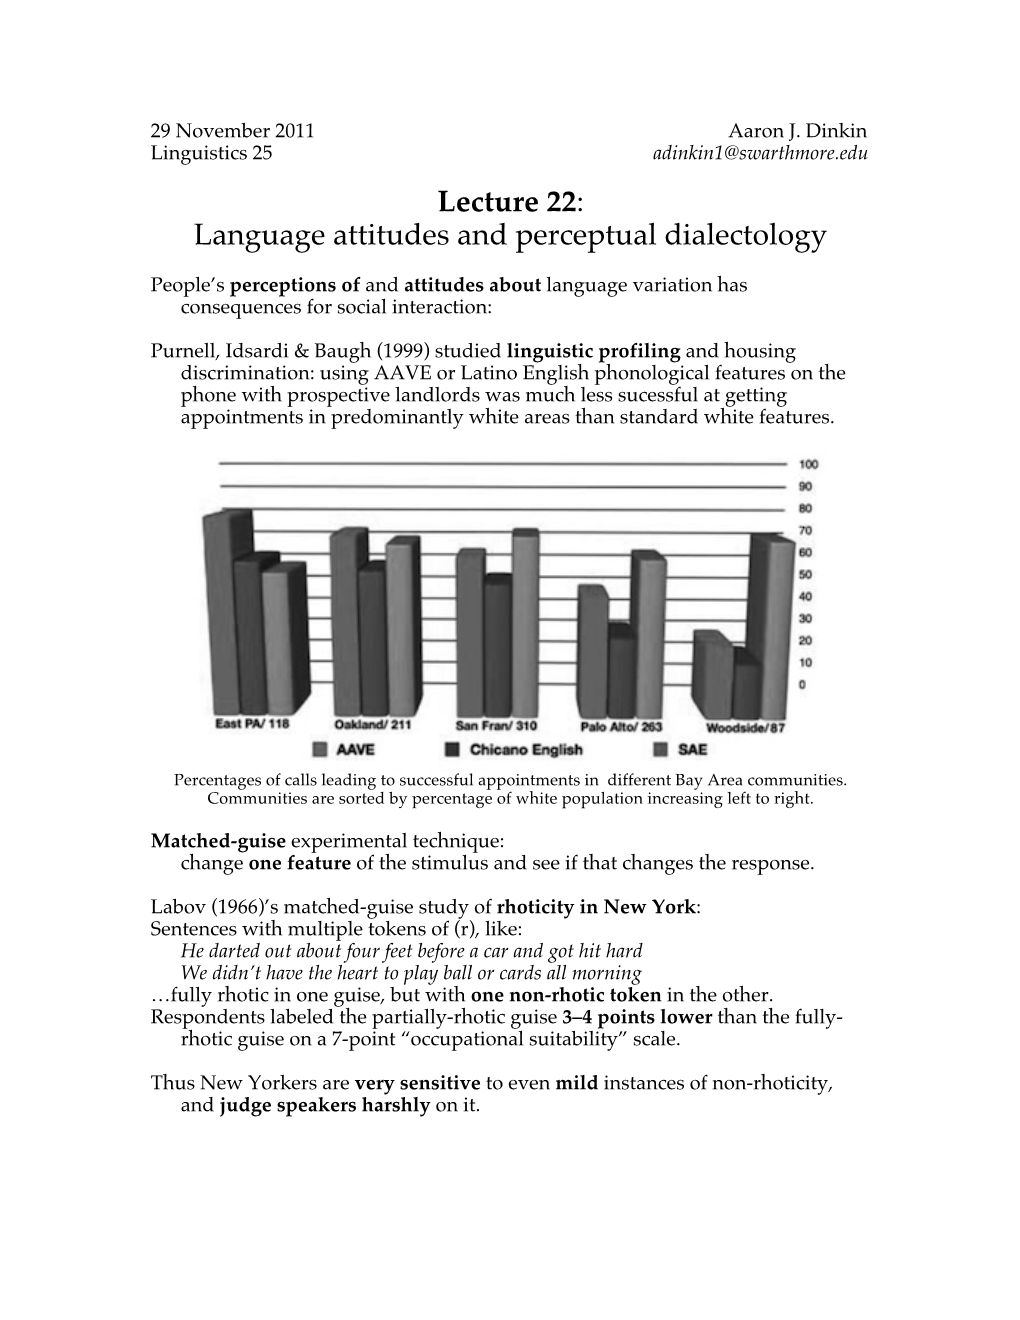 Language Attitudes and Perceptual Dialectology